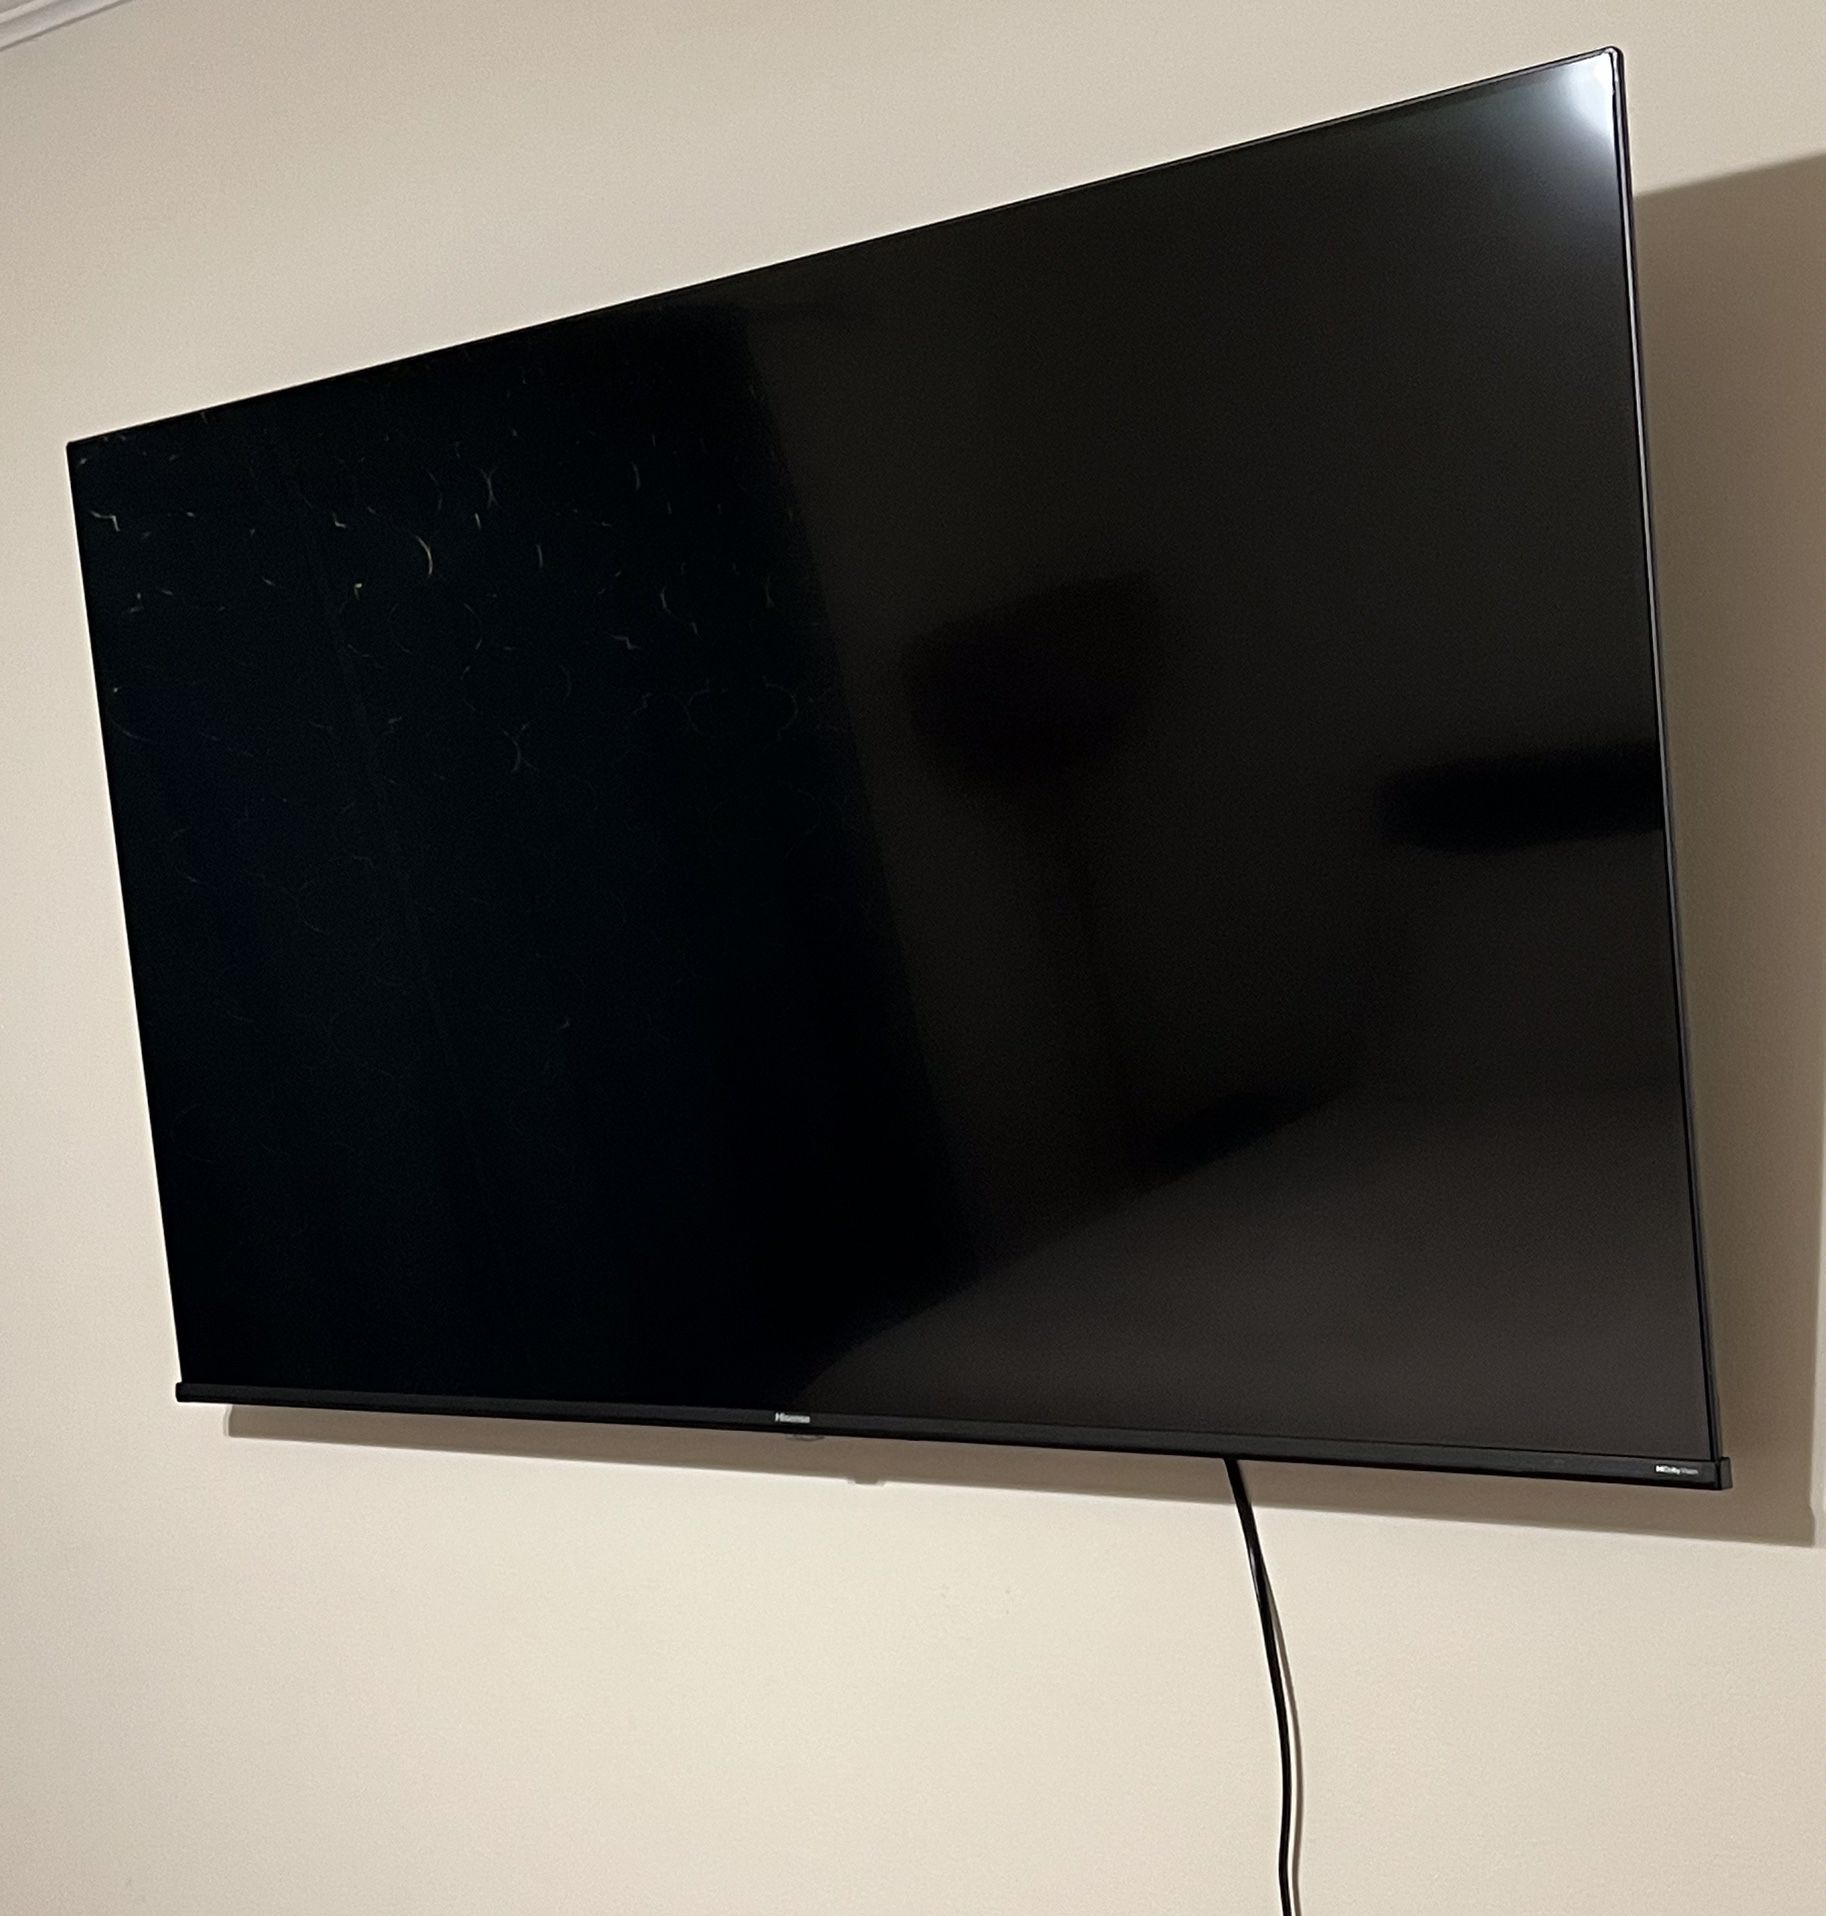 Hisense Smart TV (55 inch)